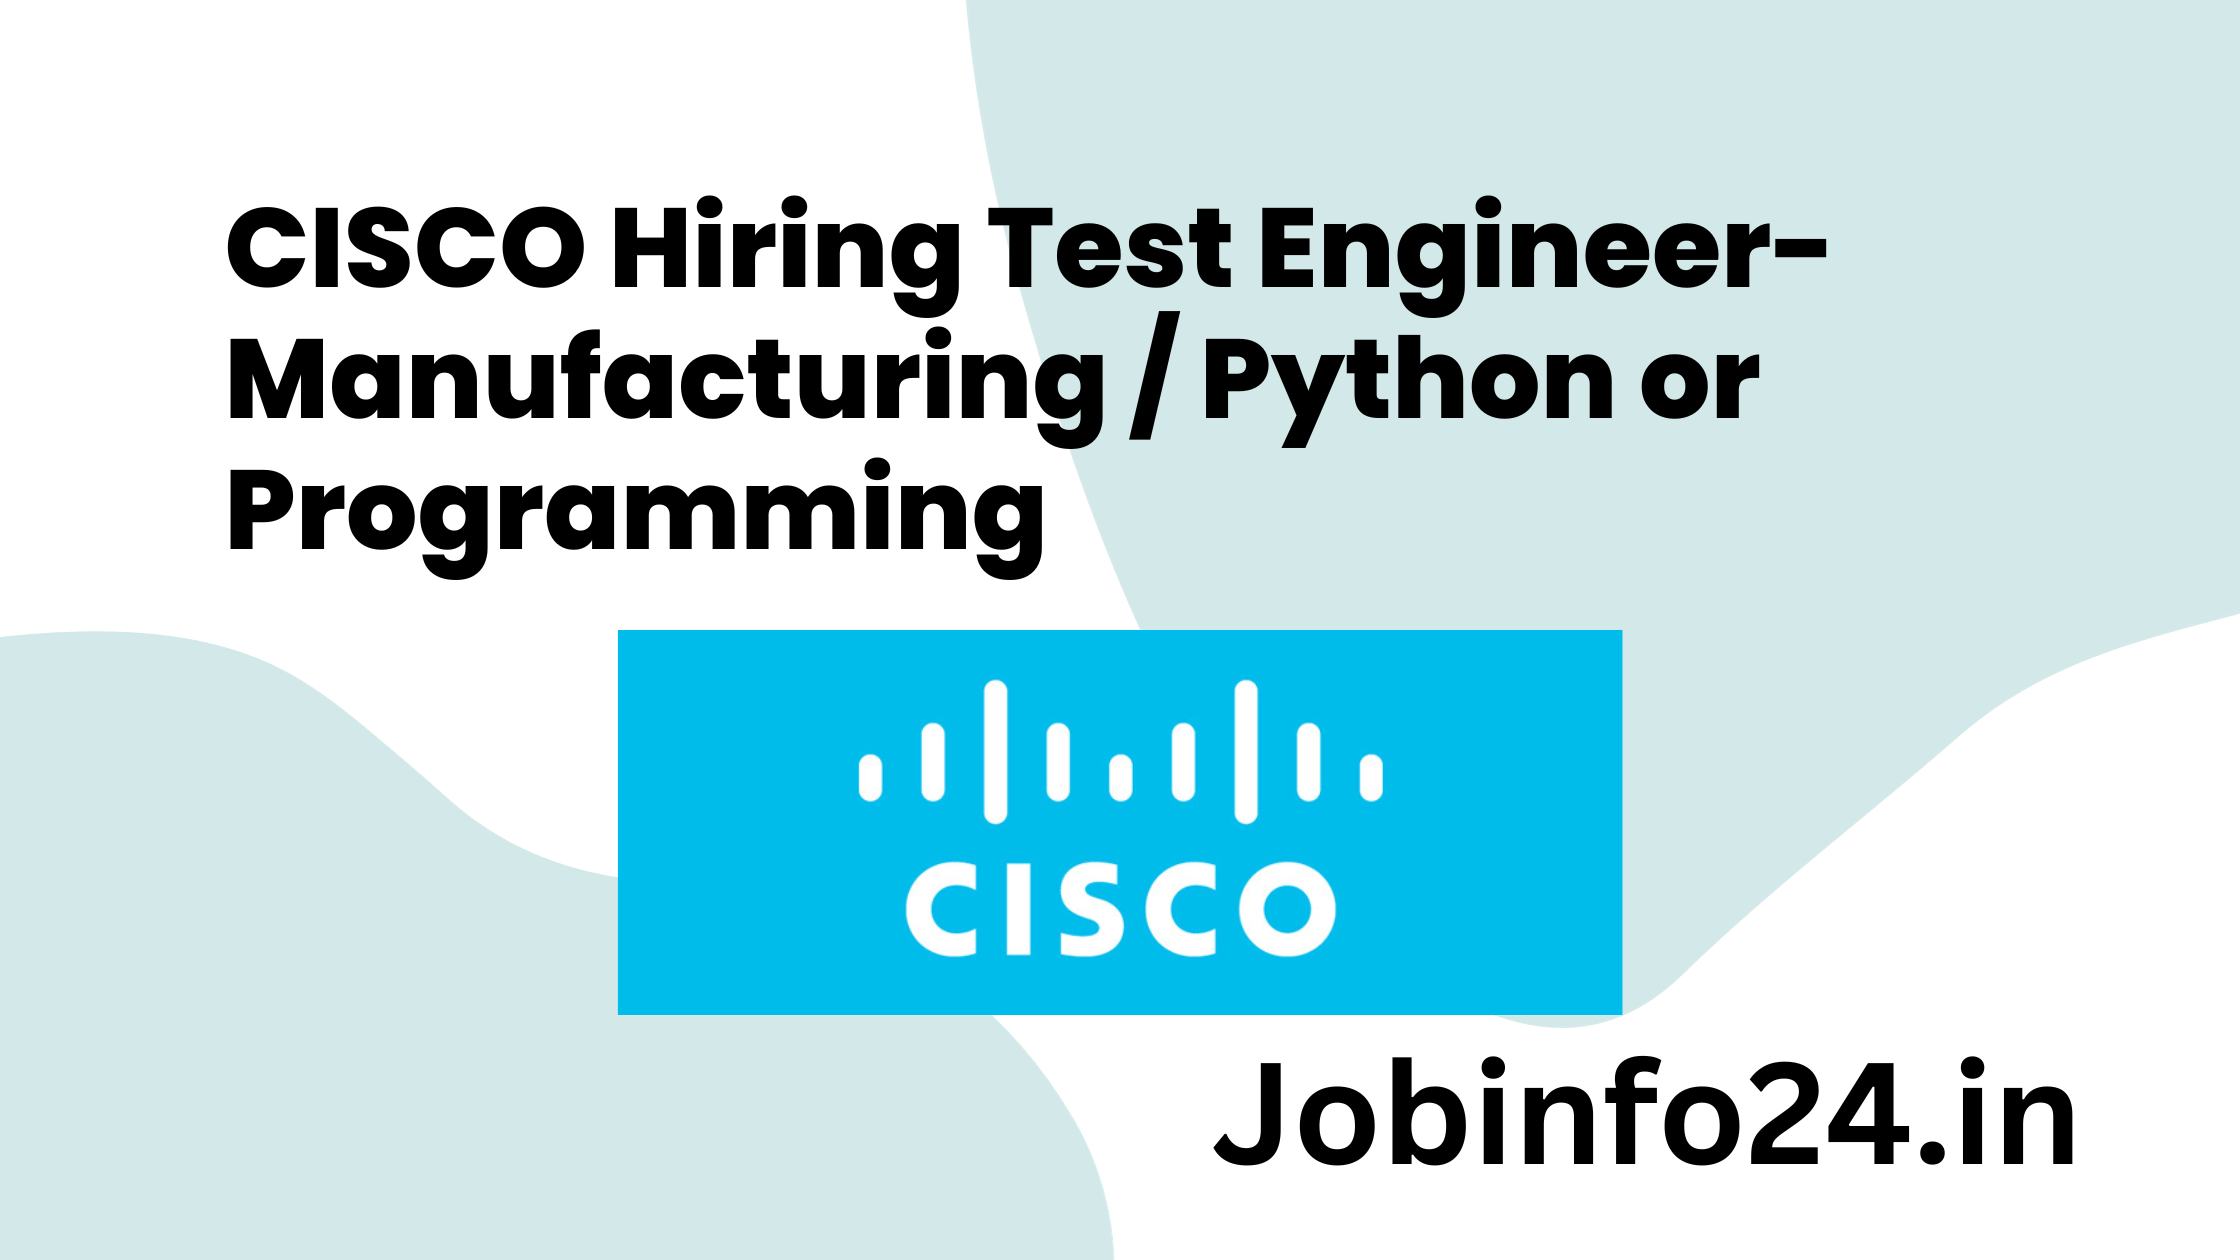 CISCO Hiring Test Engineer-Manufacturing / Python or Programming